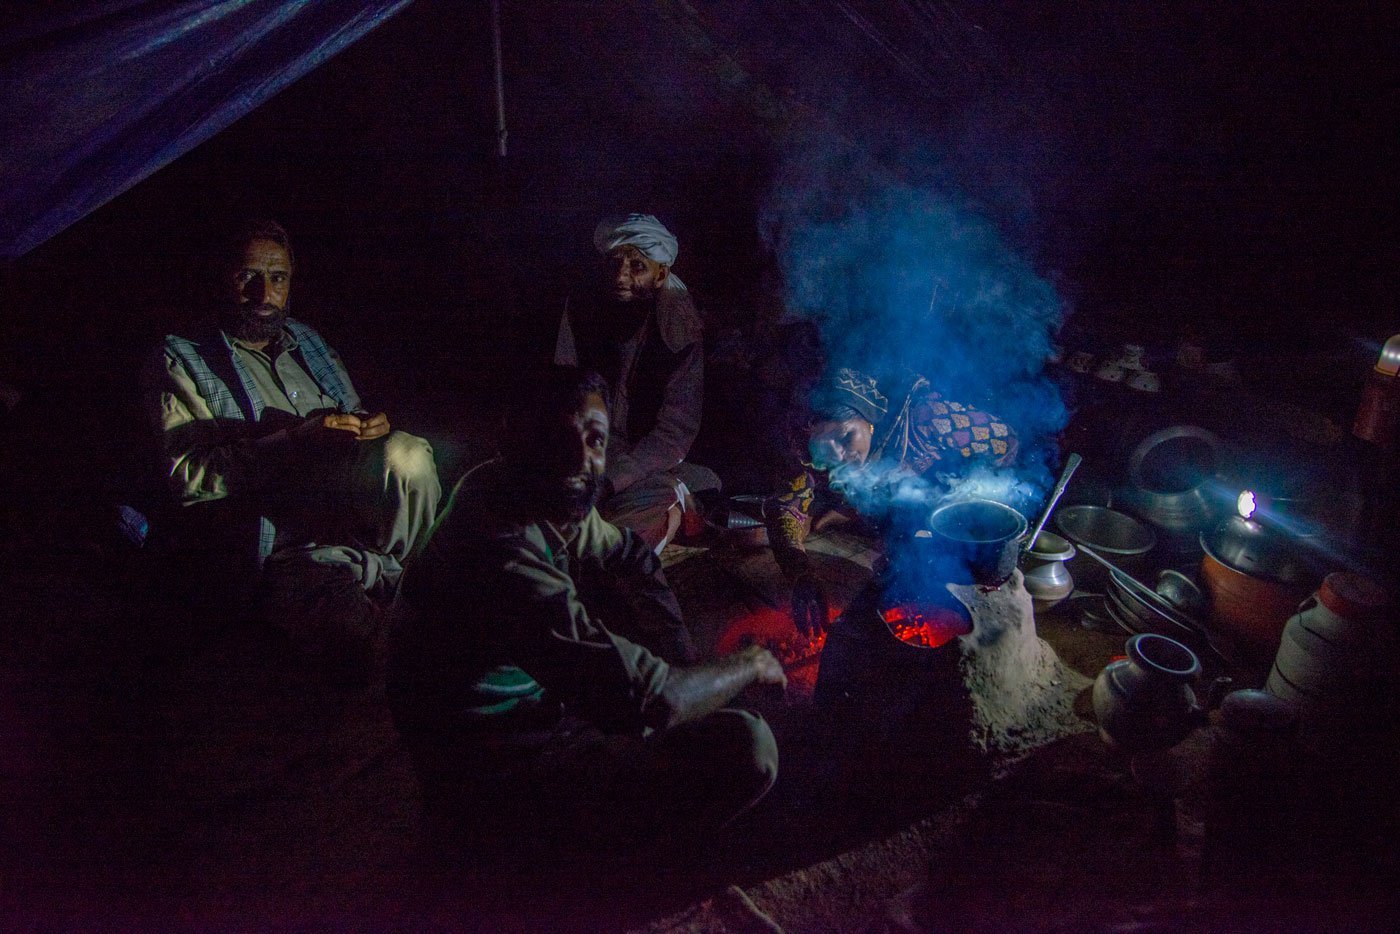 A Bakarwal family preparing dinner in their tent